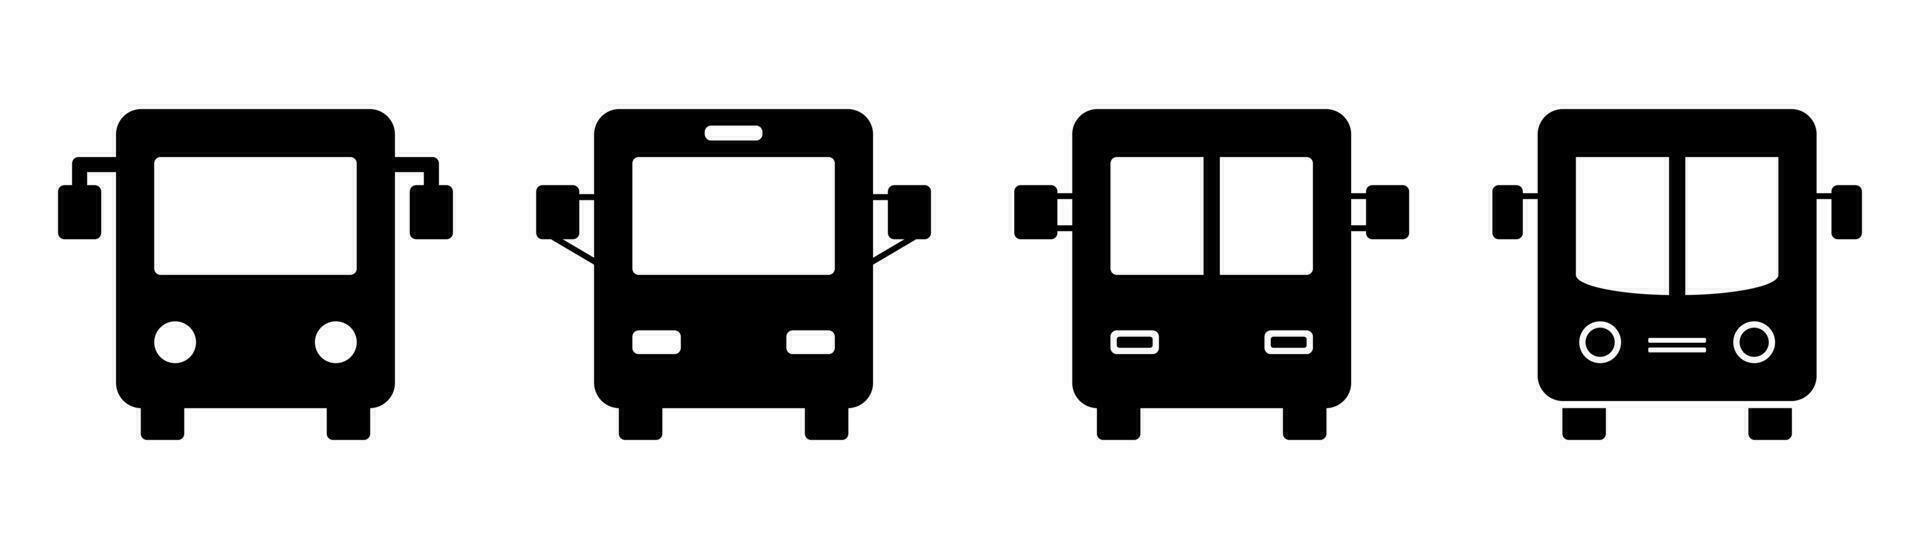 Set of bus icon. School bus icon in black. Auto symbol. Black bus icon. Transport symbol. Isolated autobus pictogram. Stock vector illustration